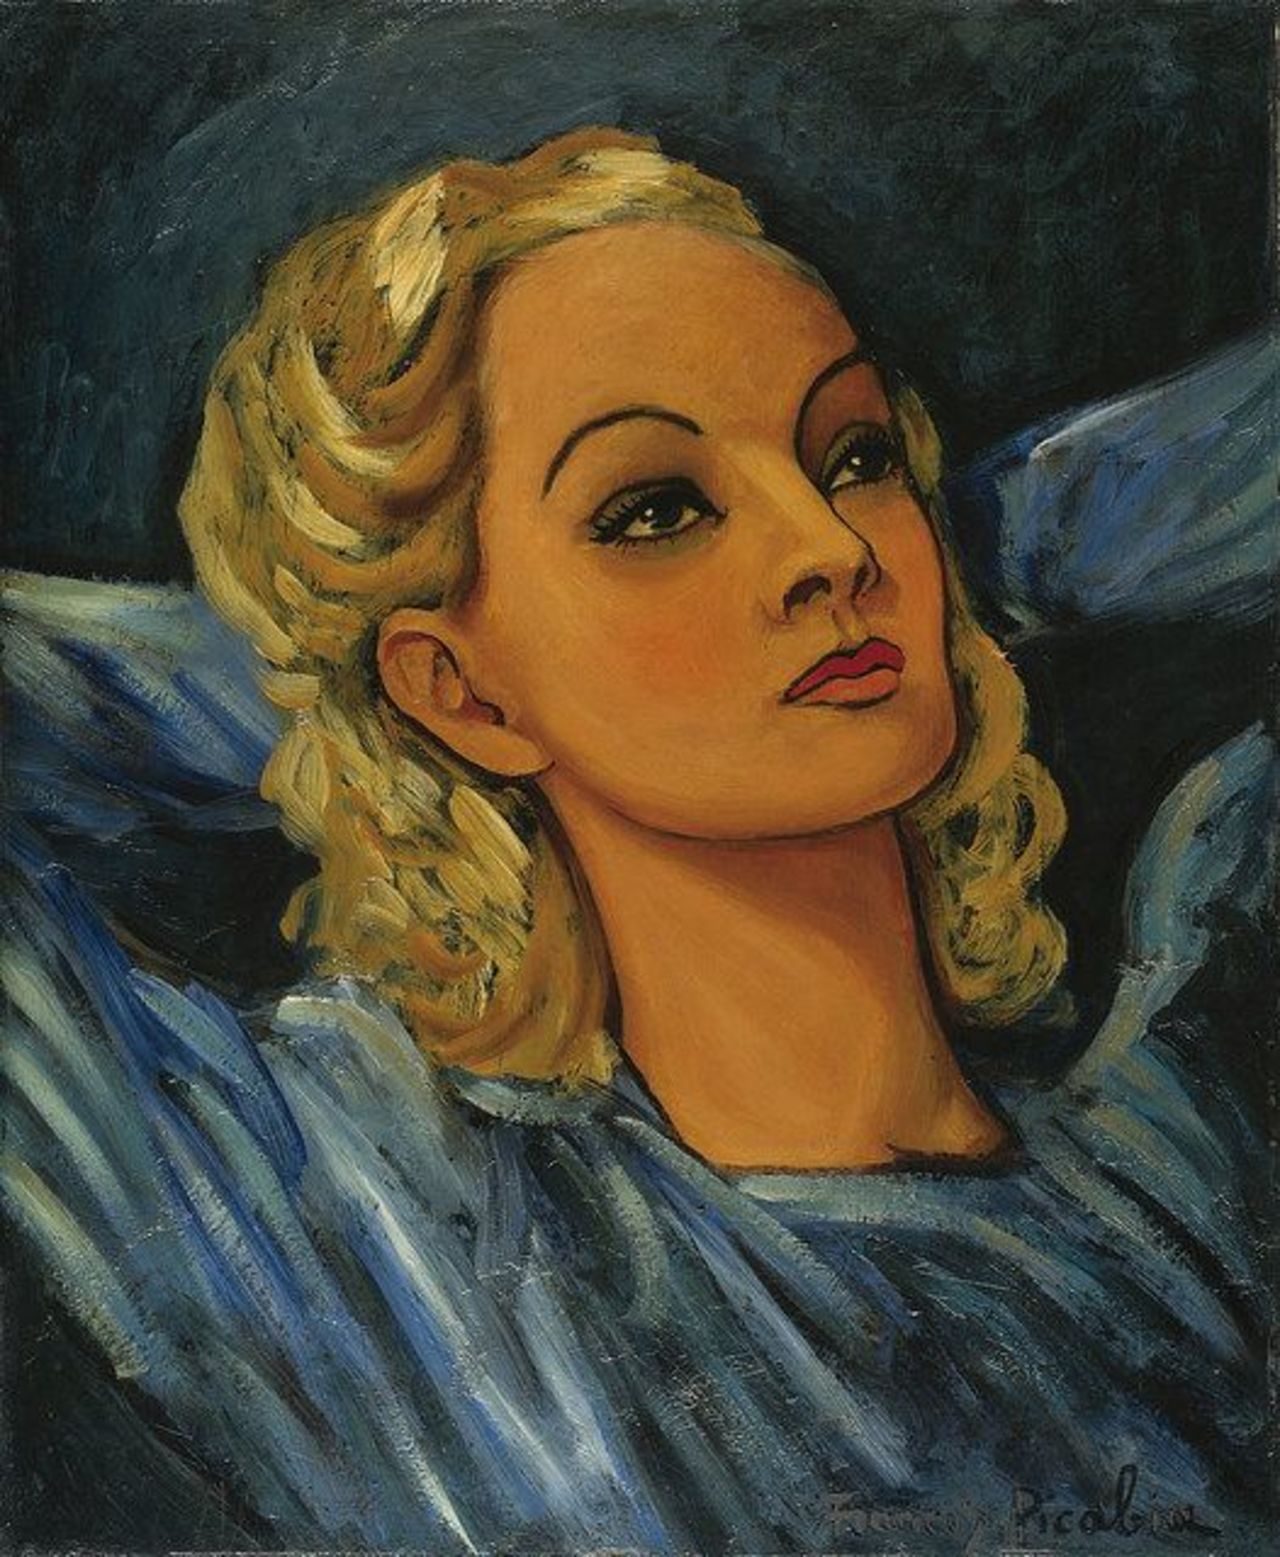 RT @deOzAlice: Picabia,"Portrait d'une blonde"#art #donaiart La única manera de ser seguido es correr más deprisa que los demás https://t.co/osJbl4Wh3F